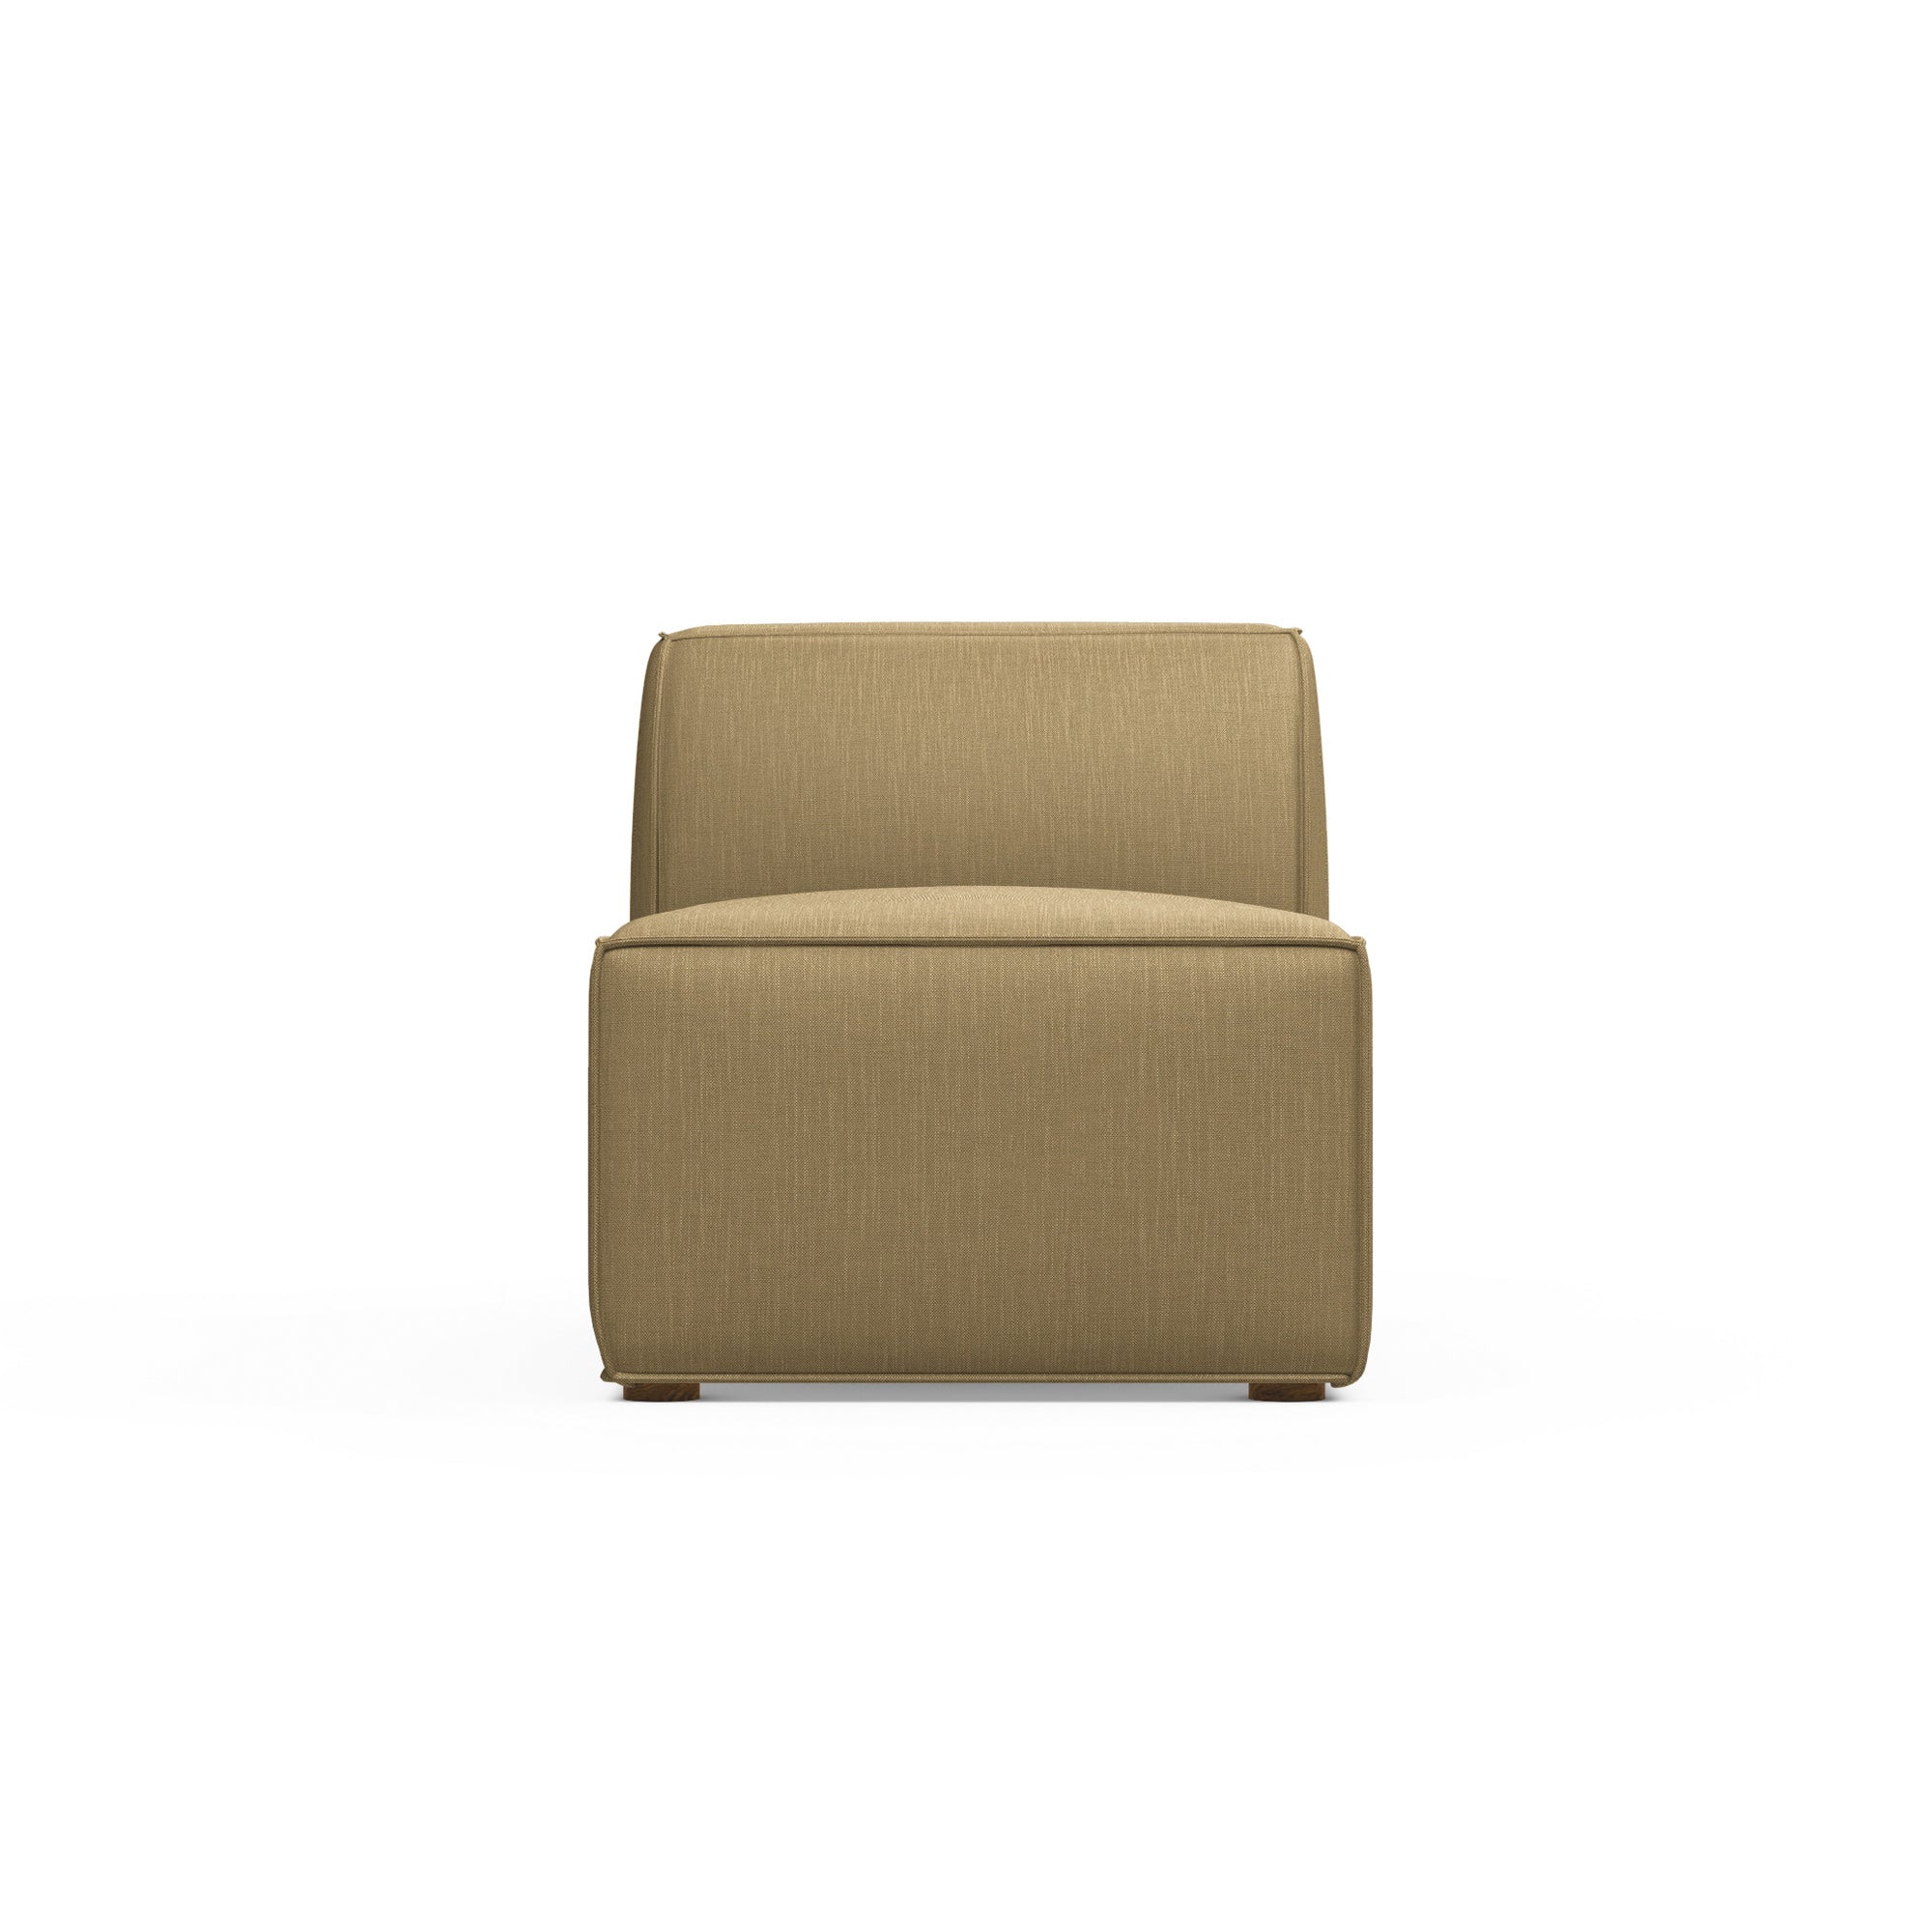 Varick Armless Chair - Marzipan Box Weave Linen